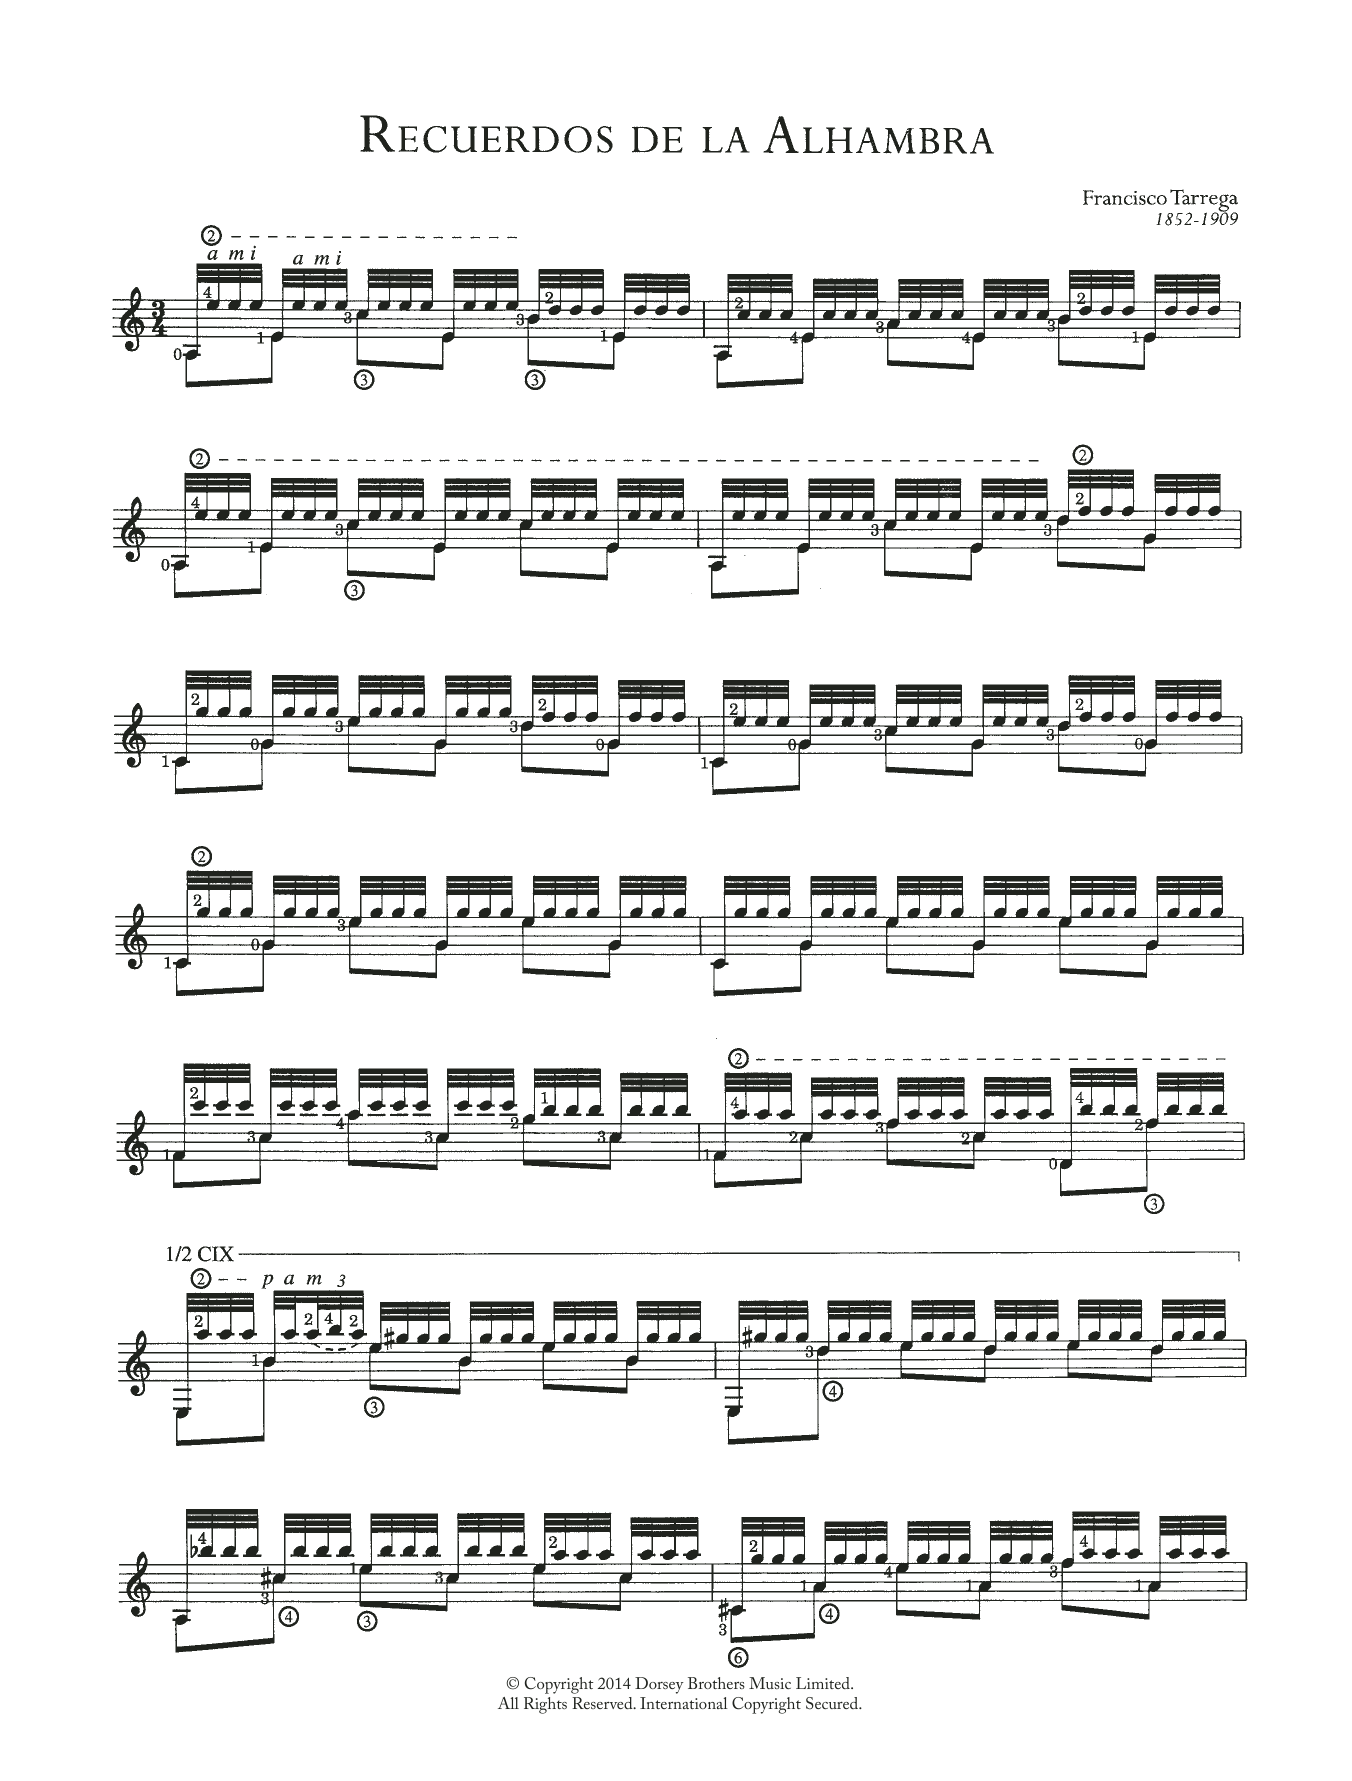 Francisco Tárrega Recuerdos de la Alhambra Sheet Music Notes & Chords for Woodwind Solo - Download or Print PDF